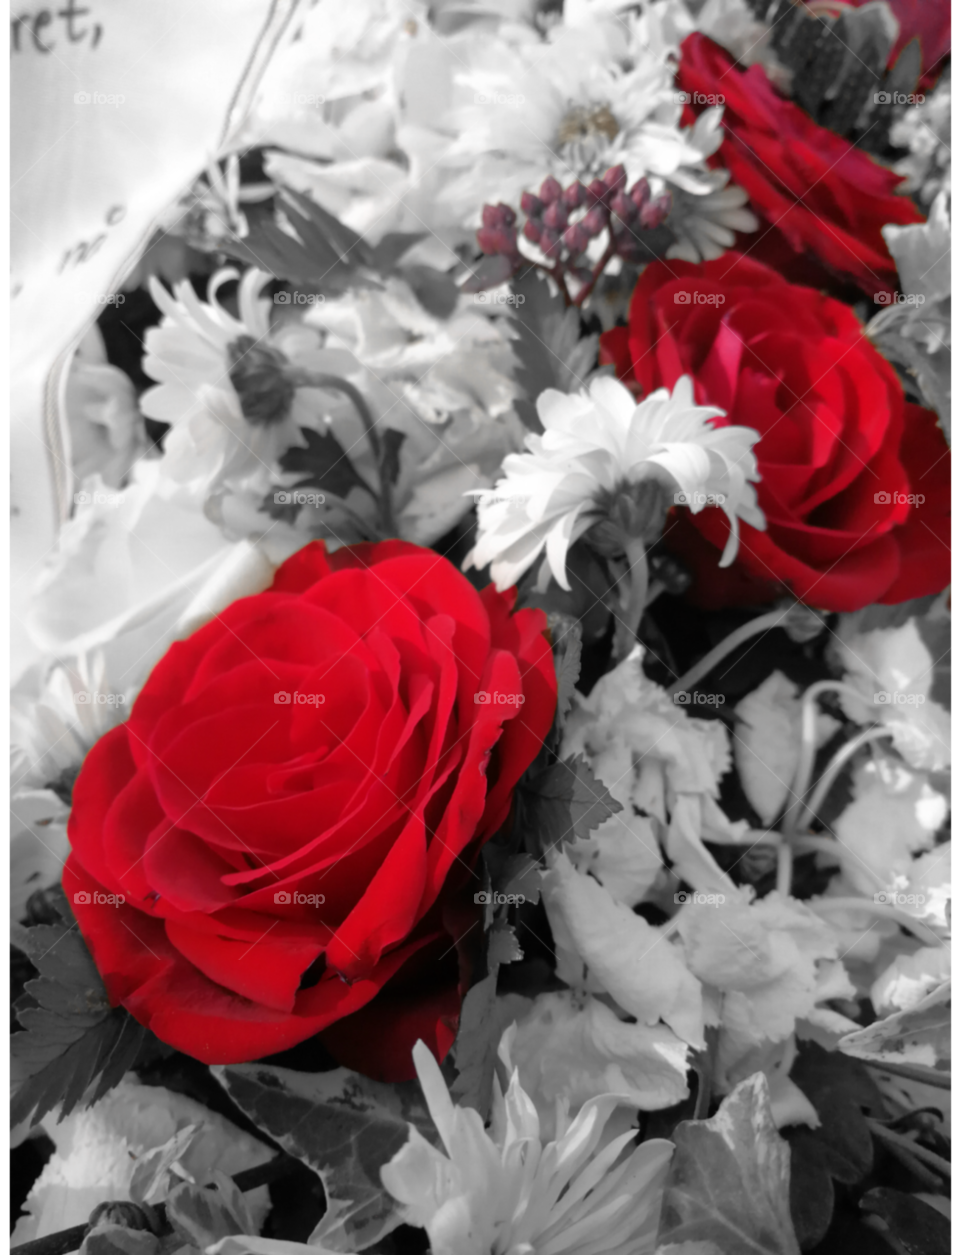 Colorsplash flowers, red roses